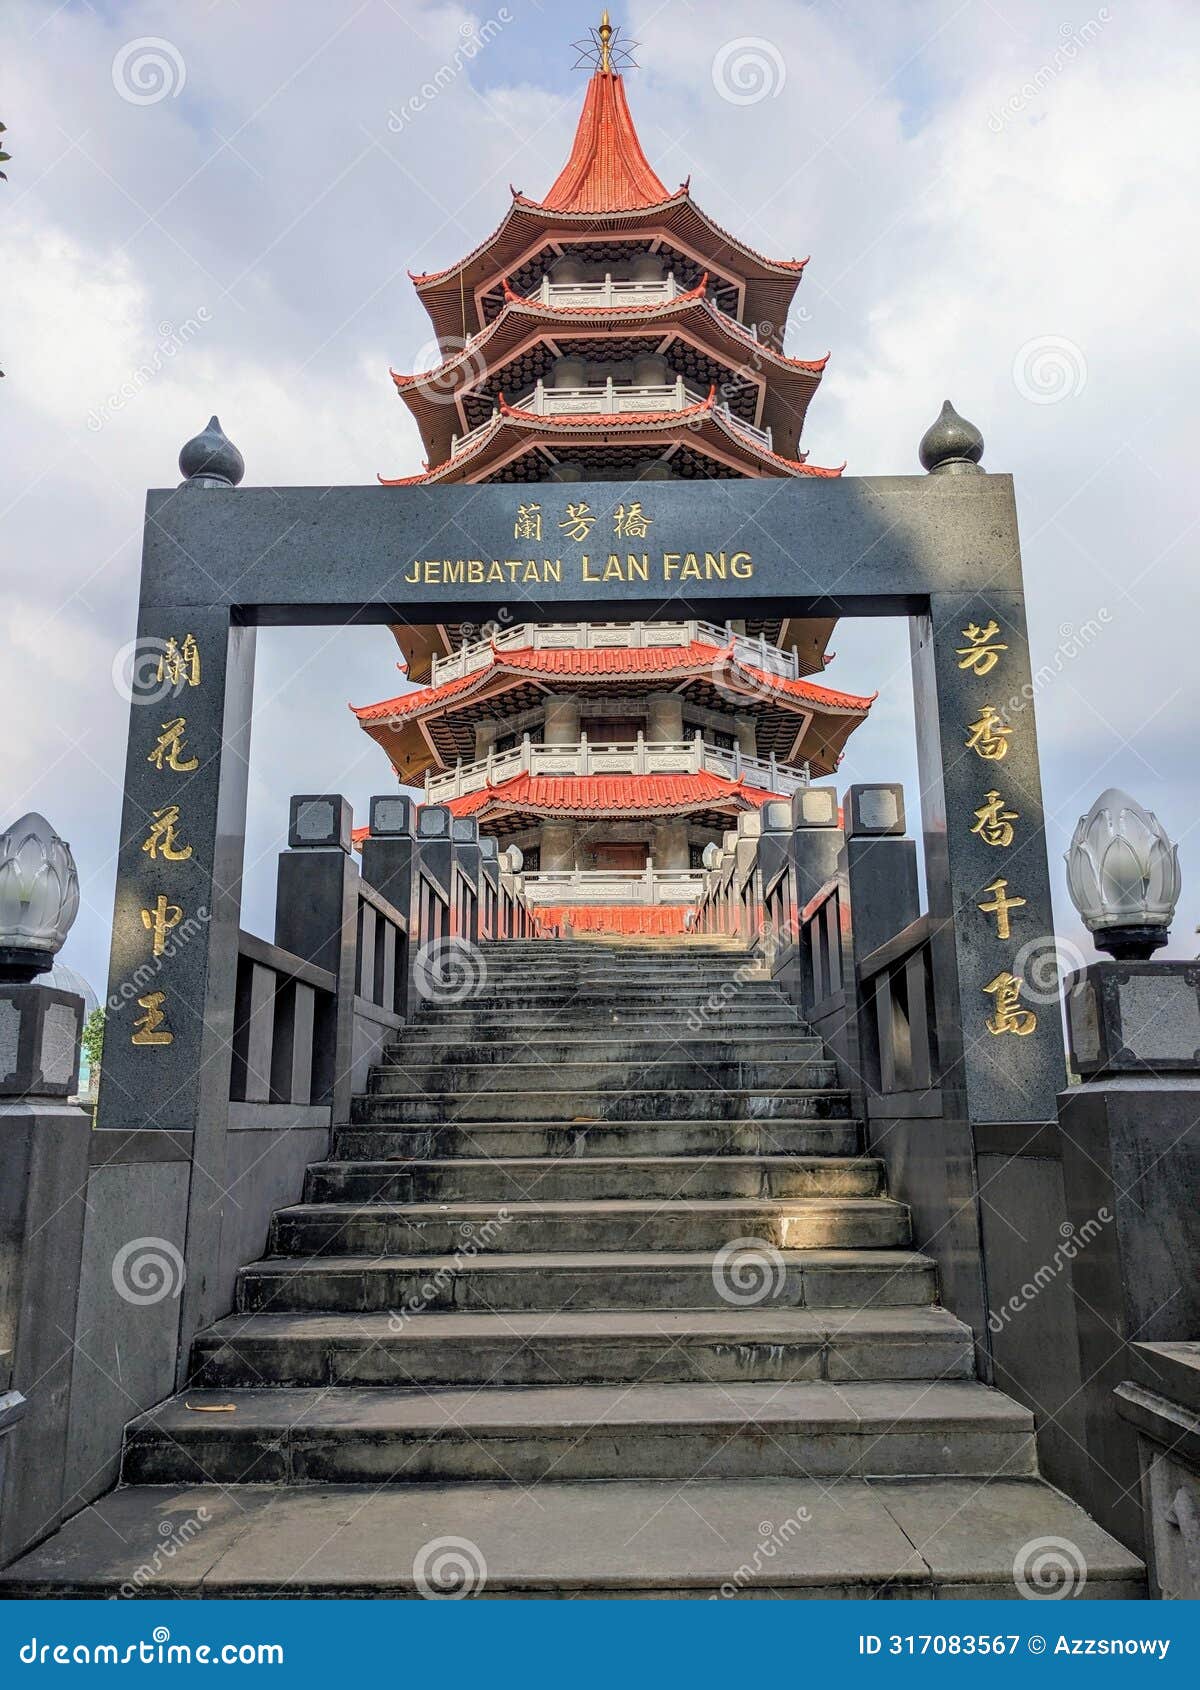 lan fang bridge at tmii pagoda